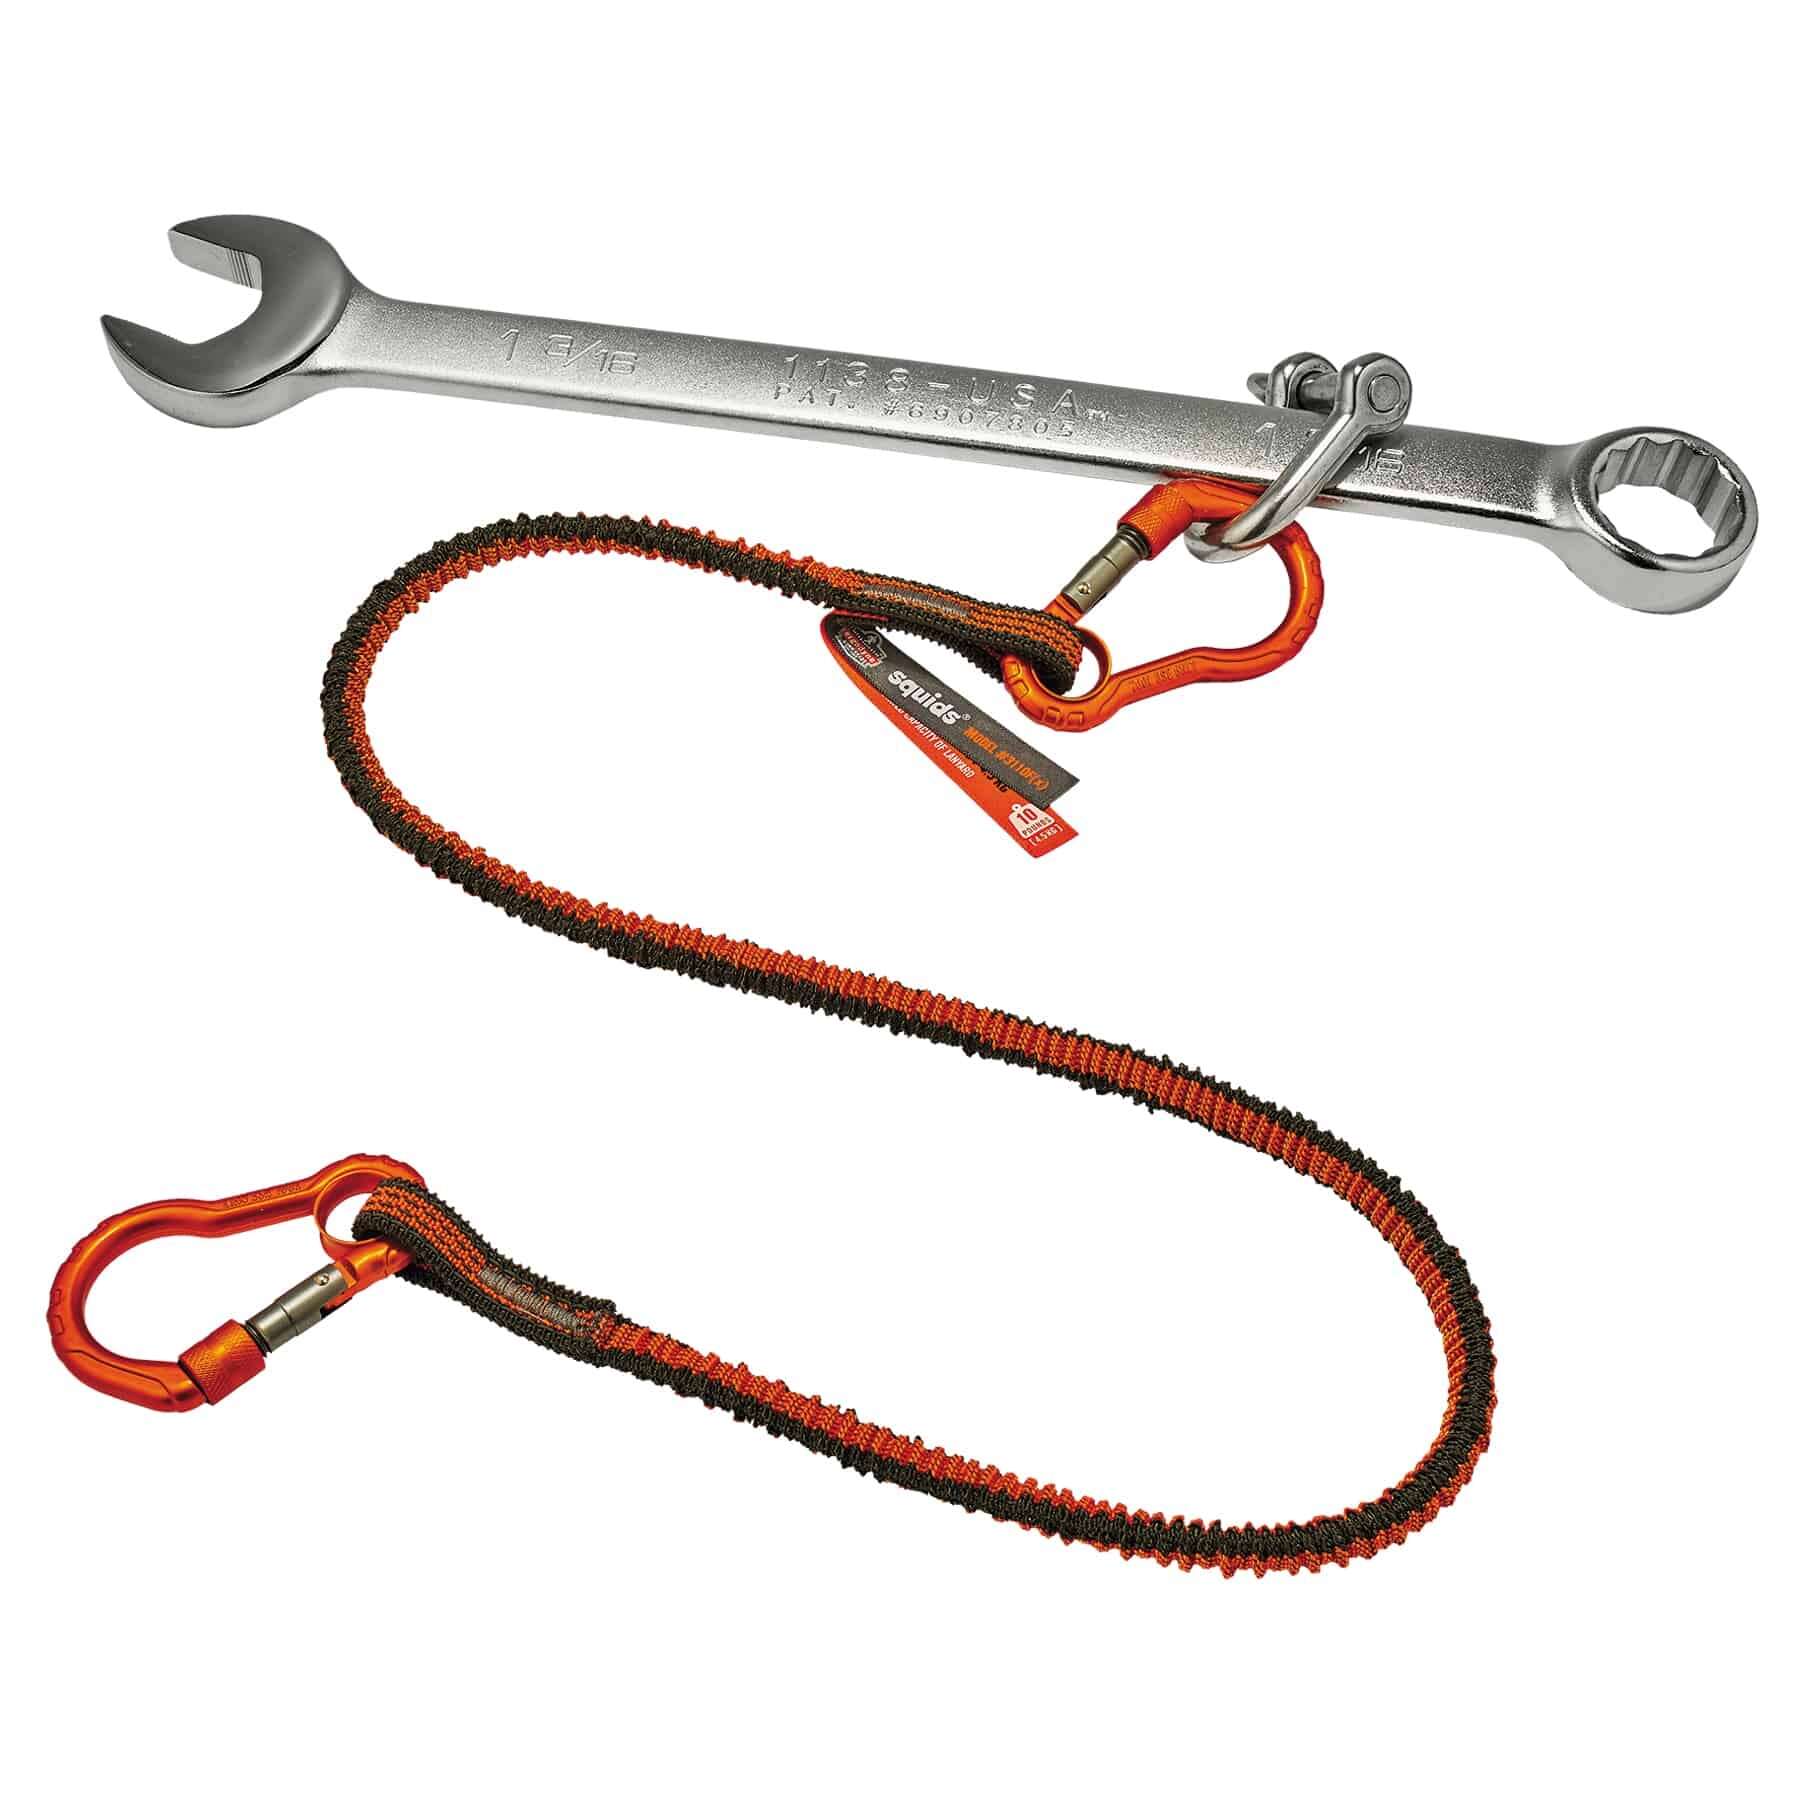 Ergodyne Squids 3104F(x) Tool Lanyard - Carabiner and Choke Loop - 10lbs